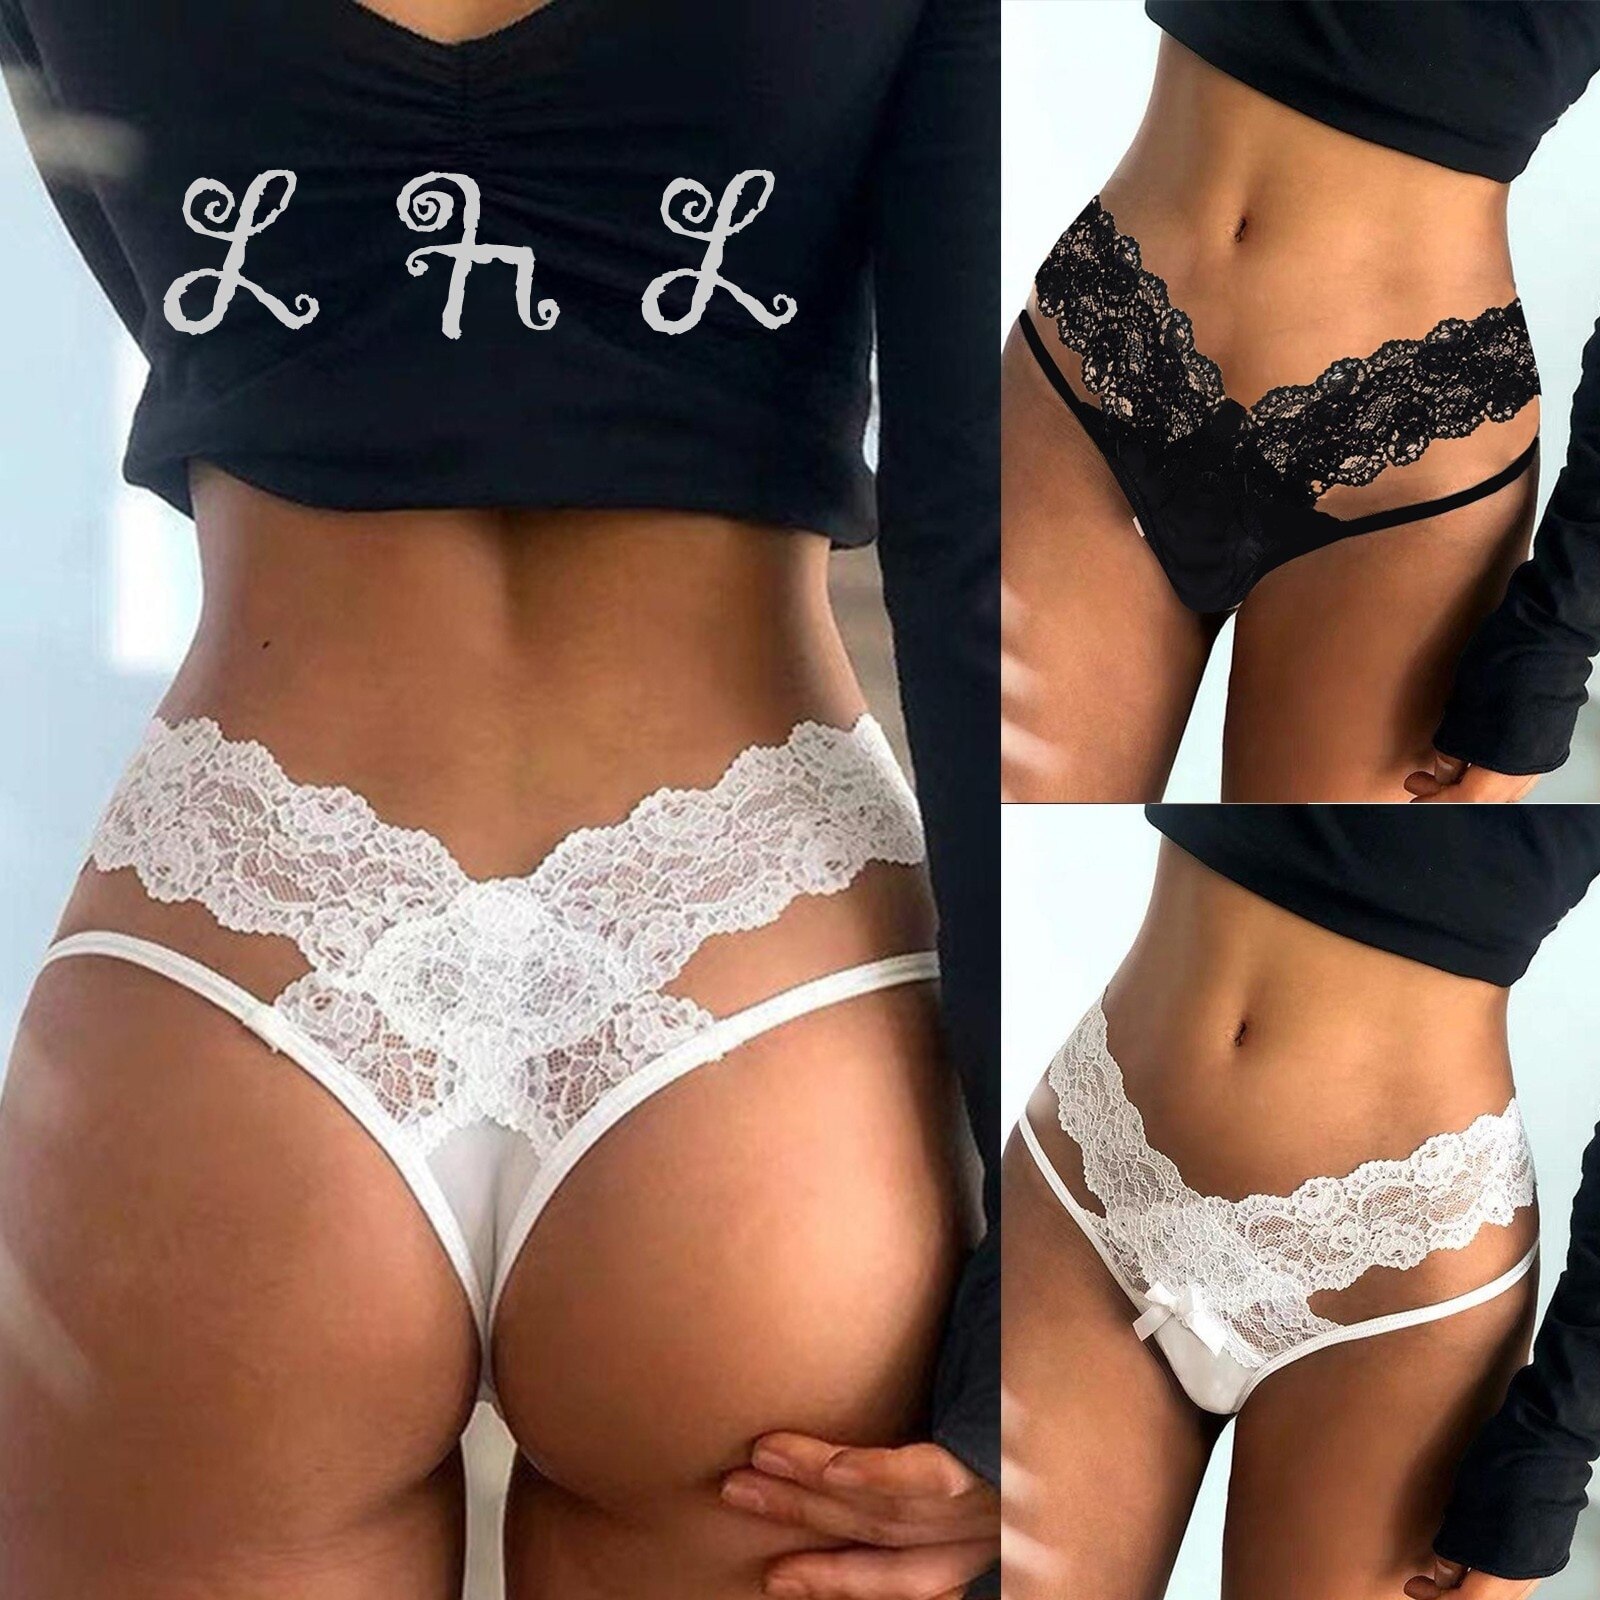 2021 Hot Sale S-3XL Sexy Women Bandage Hollow Out Lace Thong Panties Lingerie T back Lingerie Soft Comfortable Underwear